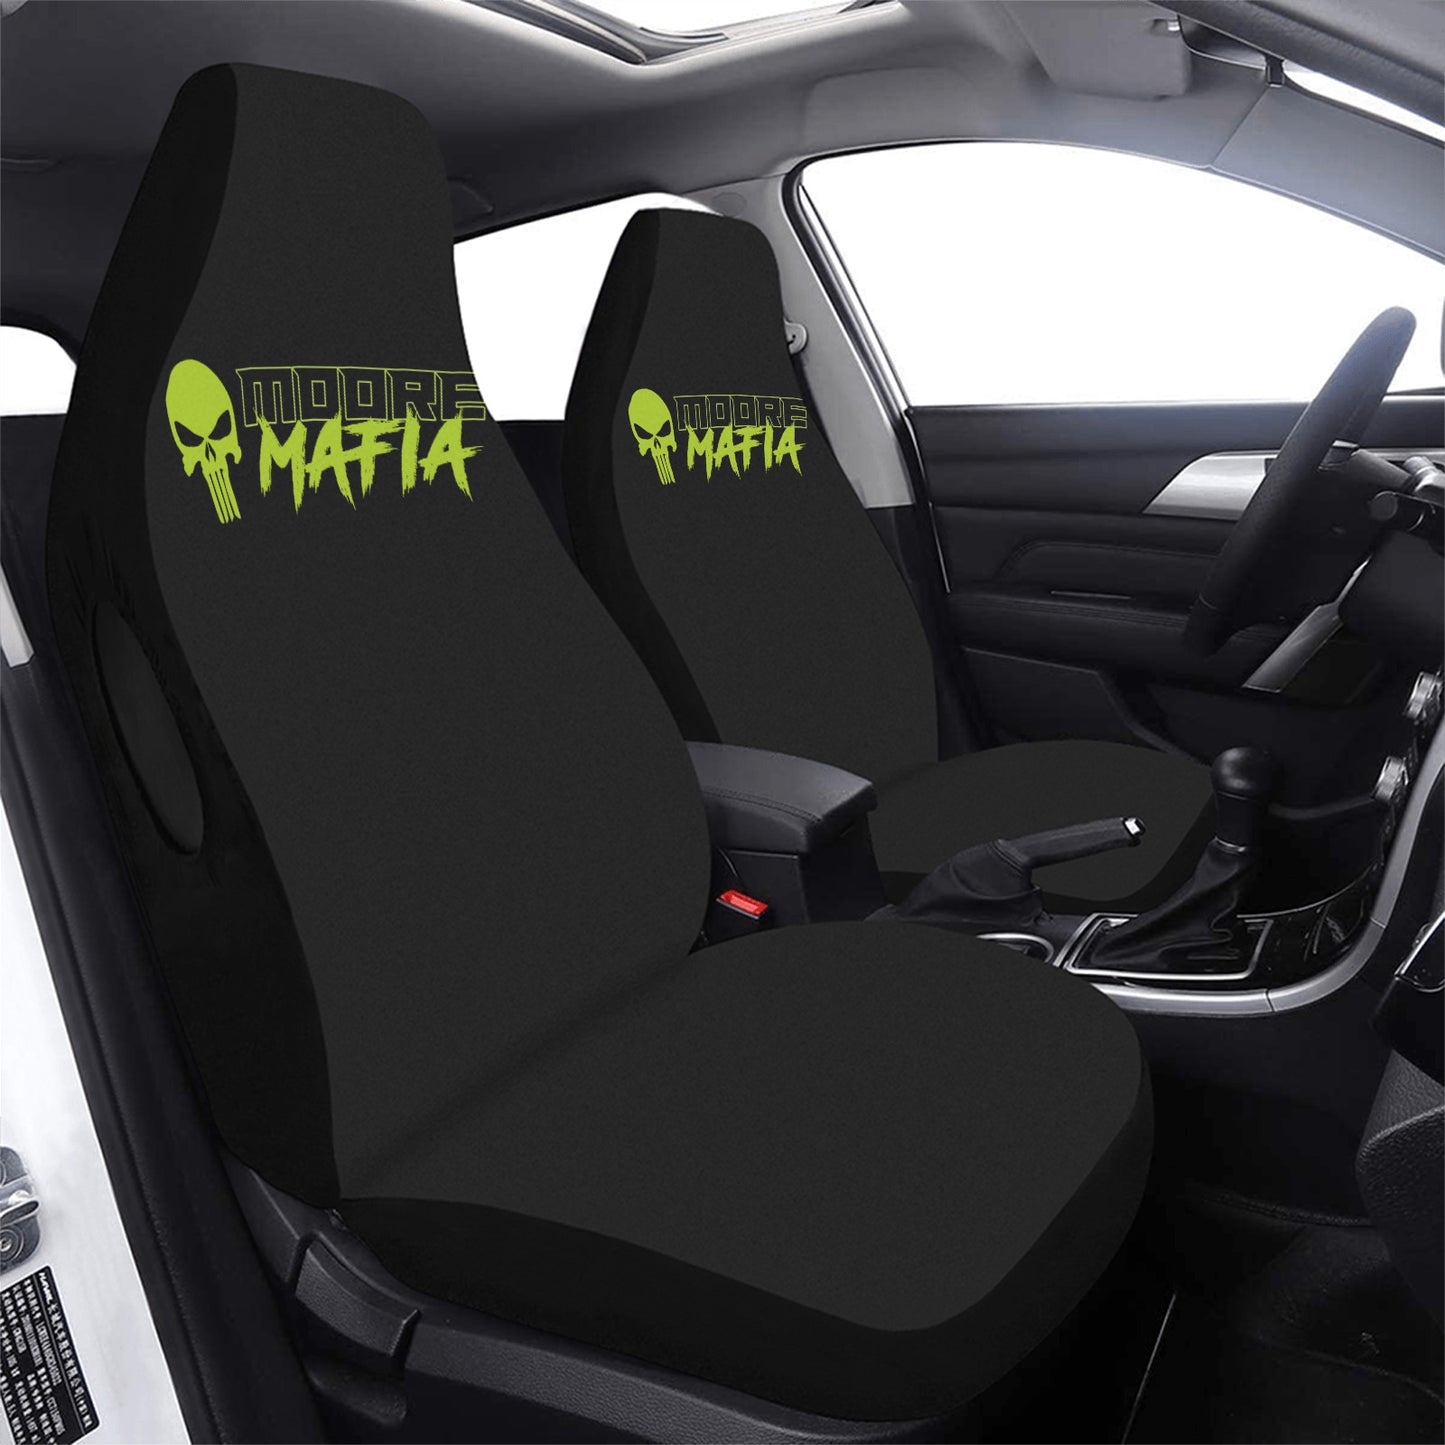 Moore Mafia Seat Covers Car Seat Cover Set of 2)